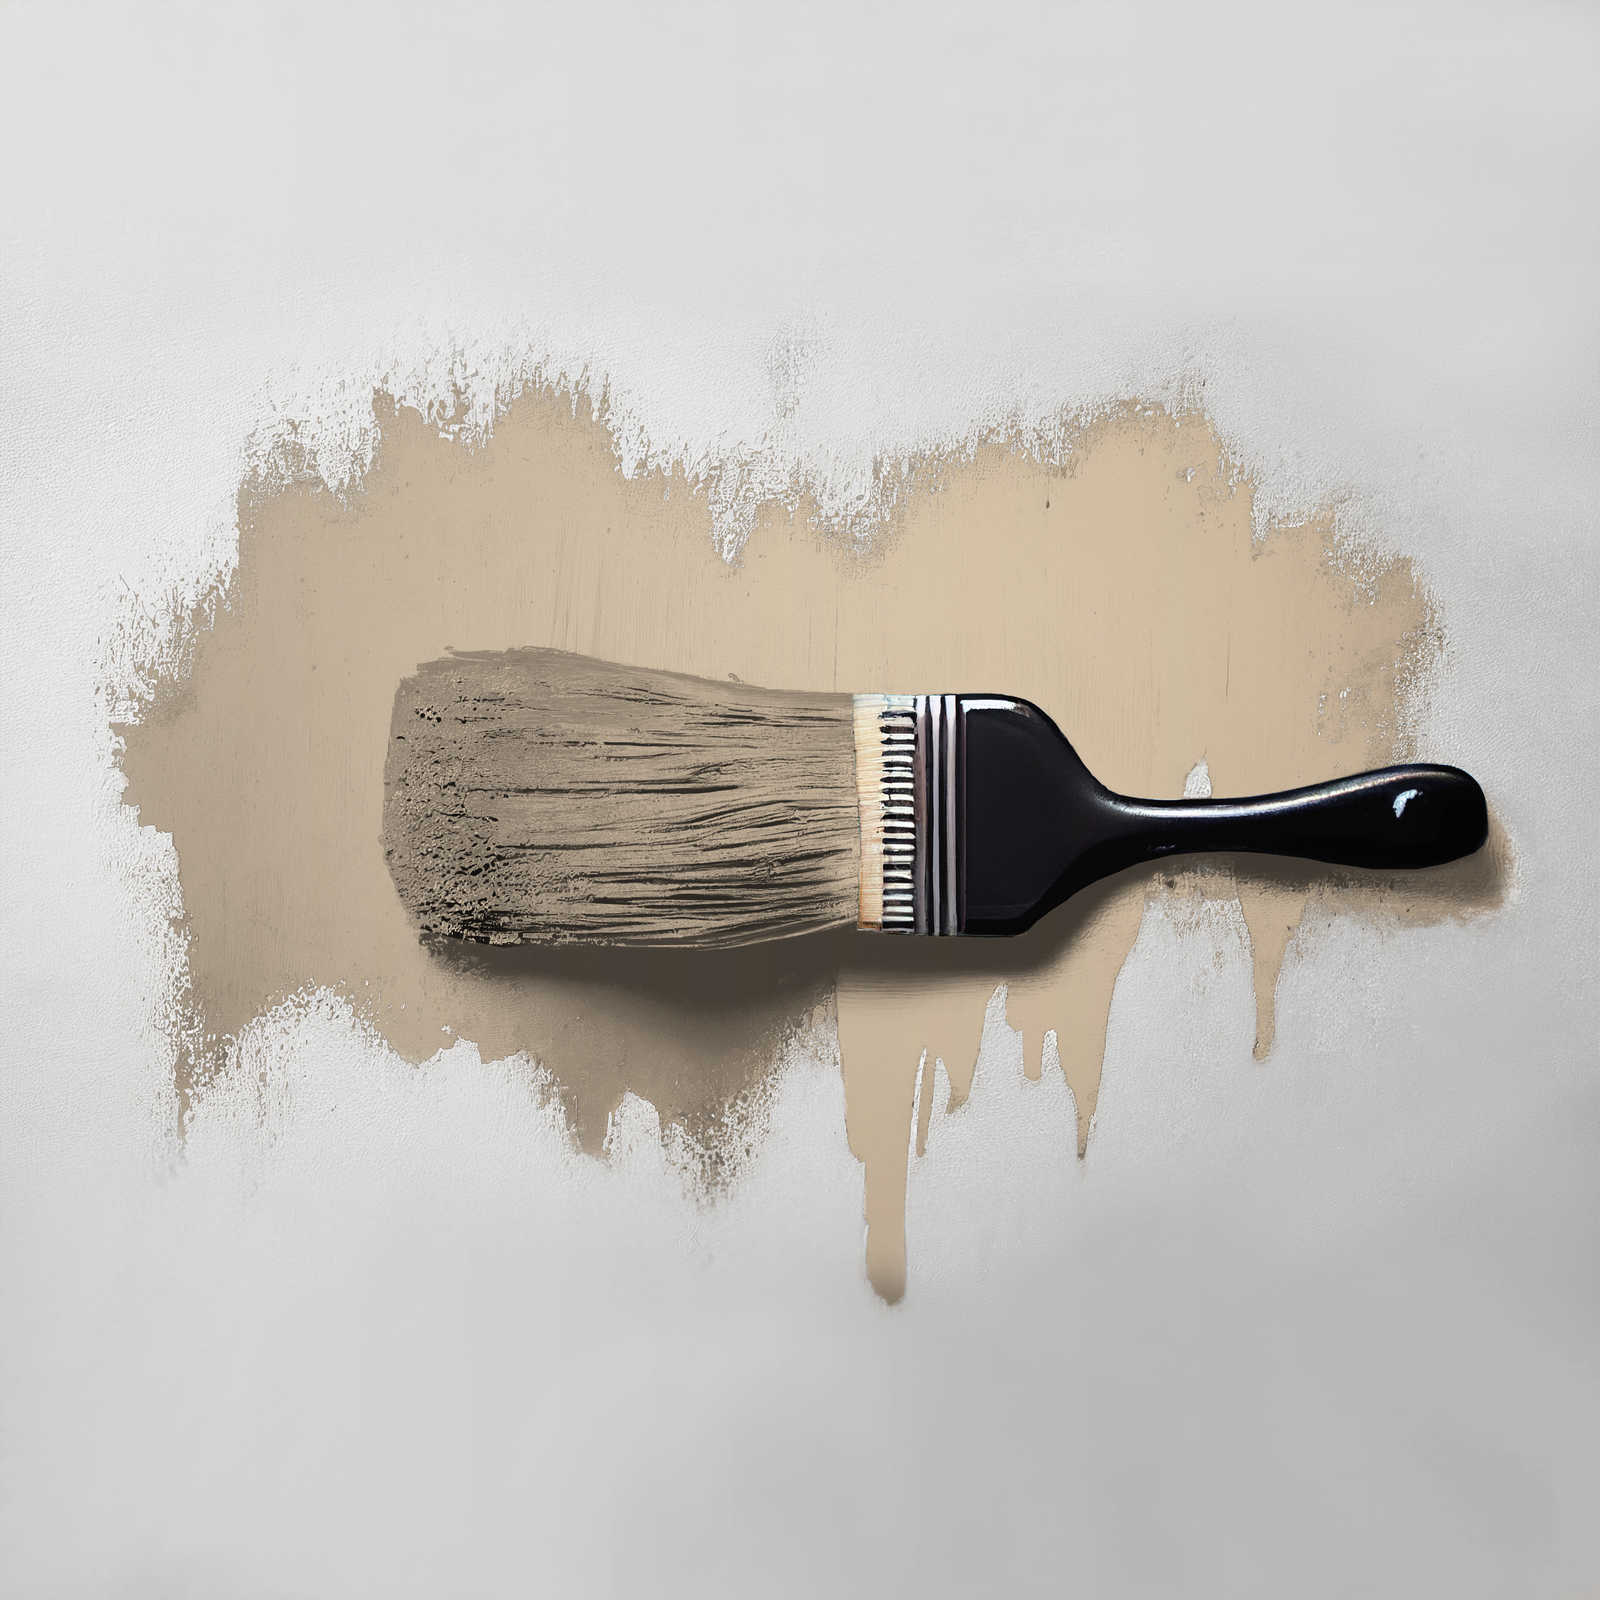             Pintura mural TCK6002 »Flat White Coffee« en beige cálido – 5,0 litro
        